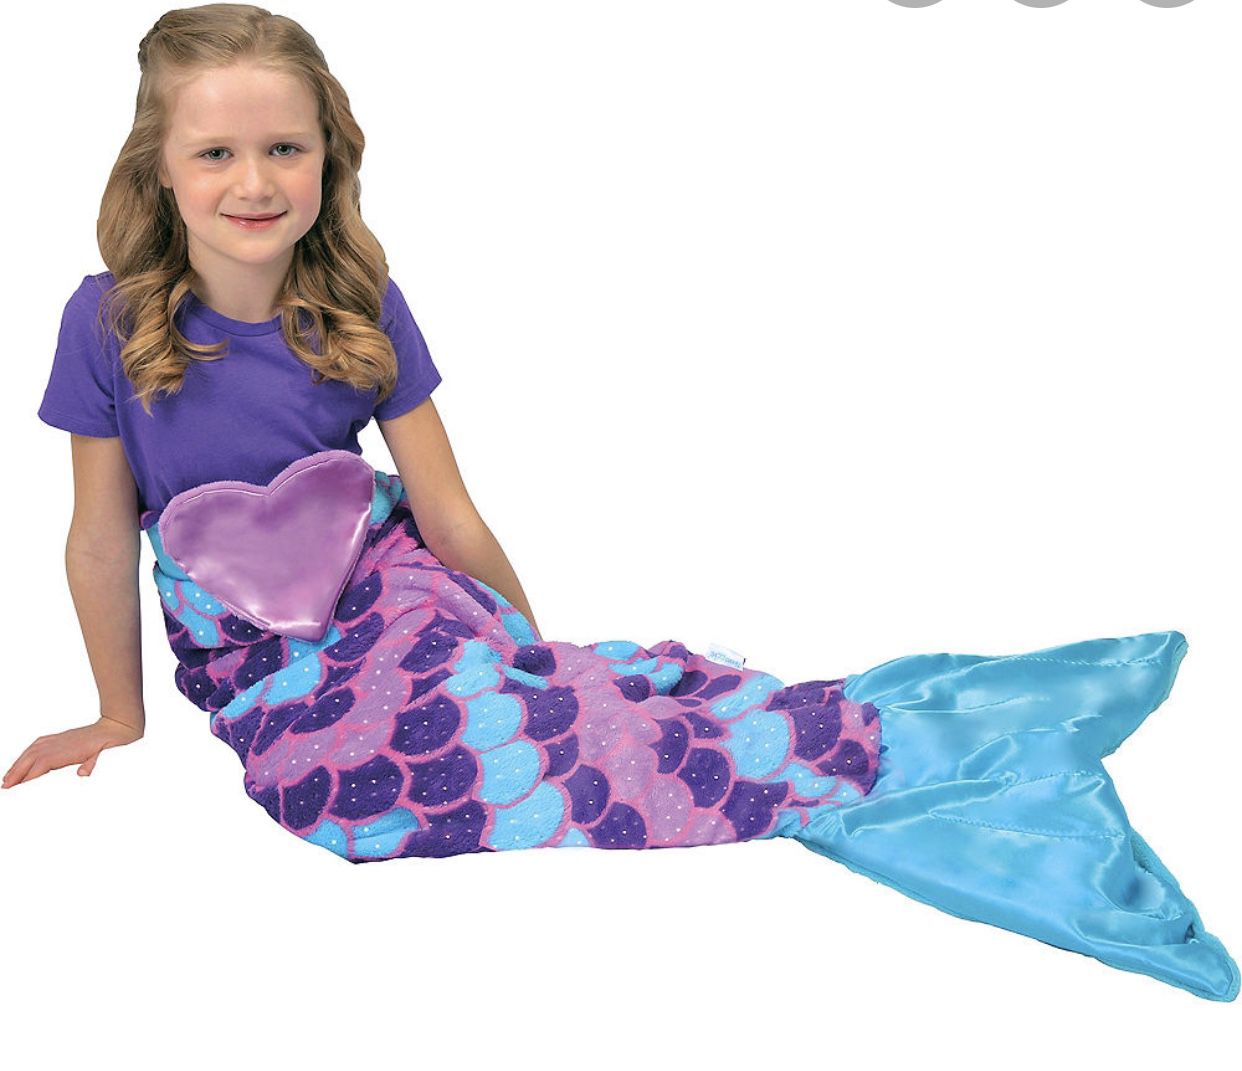 Snuggie mermaid Tails